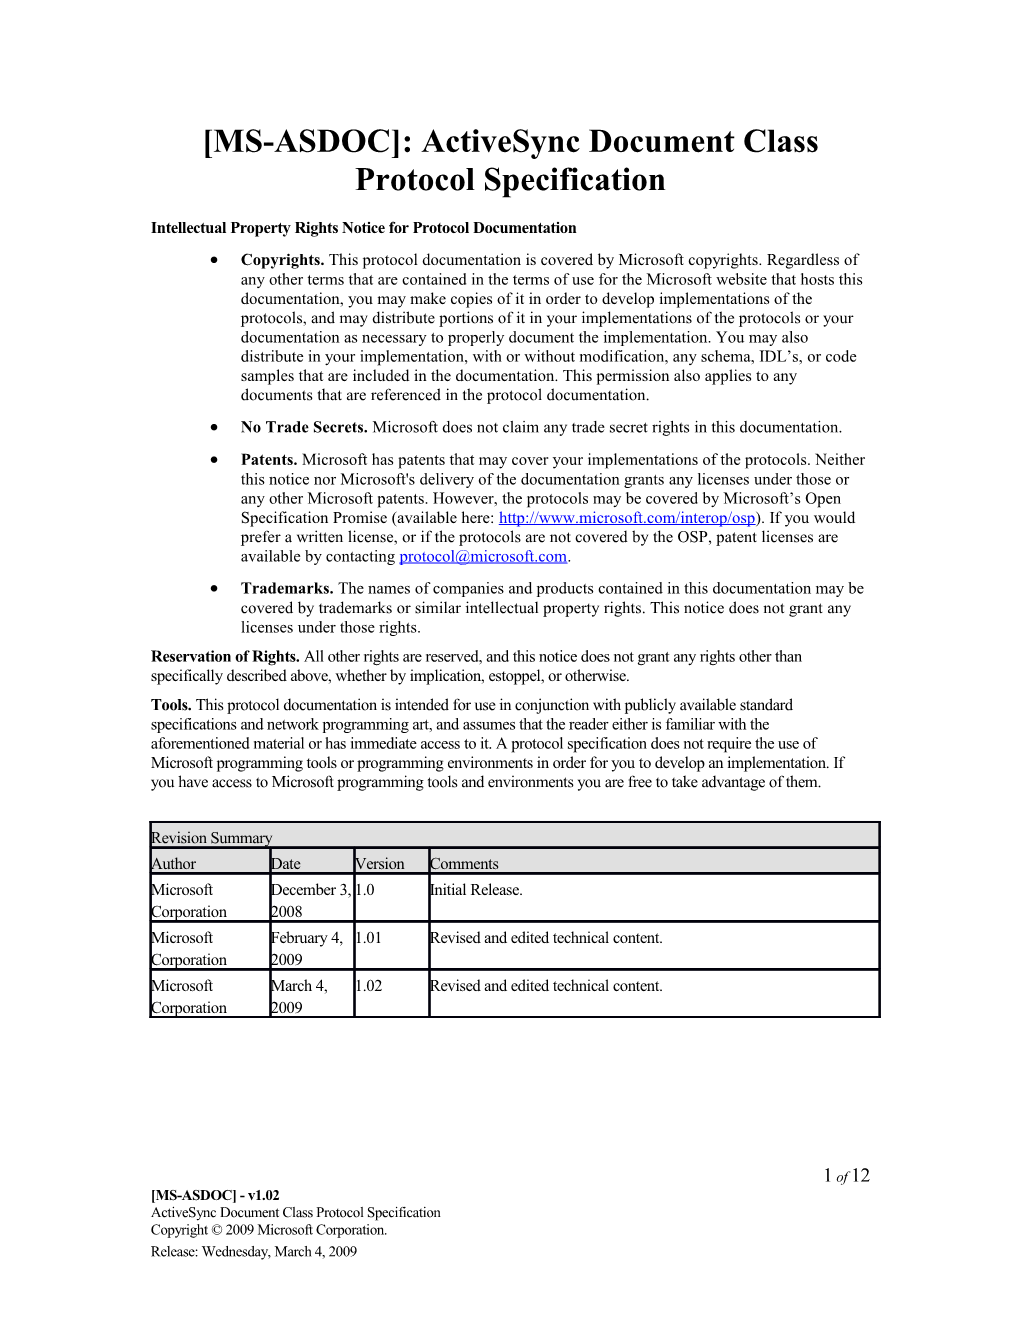 MS-ASDOC : Activesync Document Class Protocol Specification